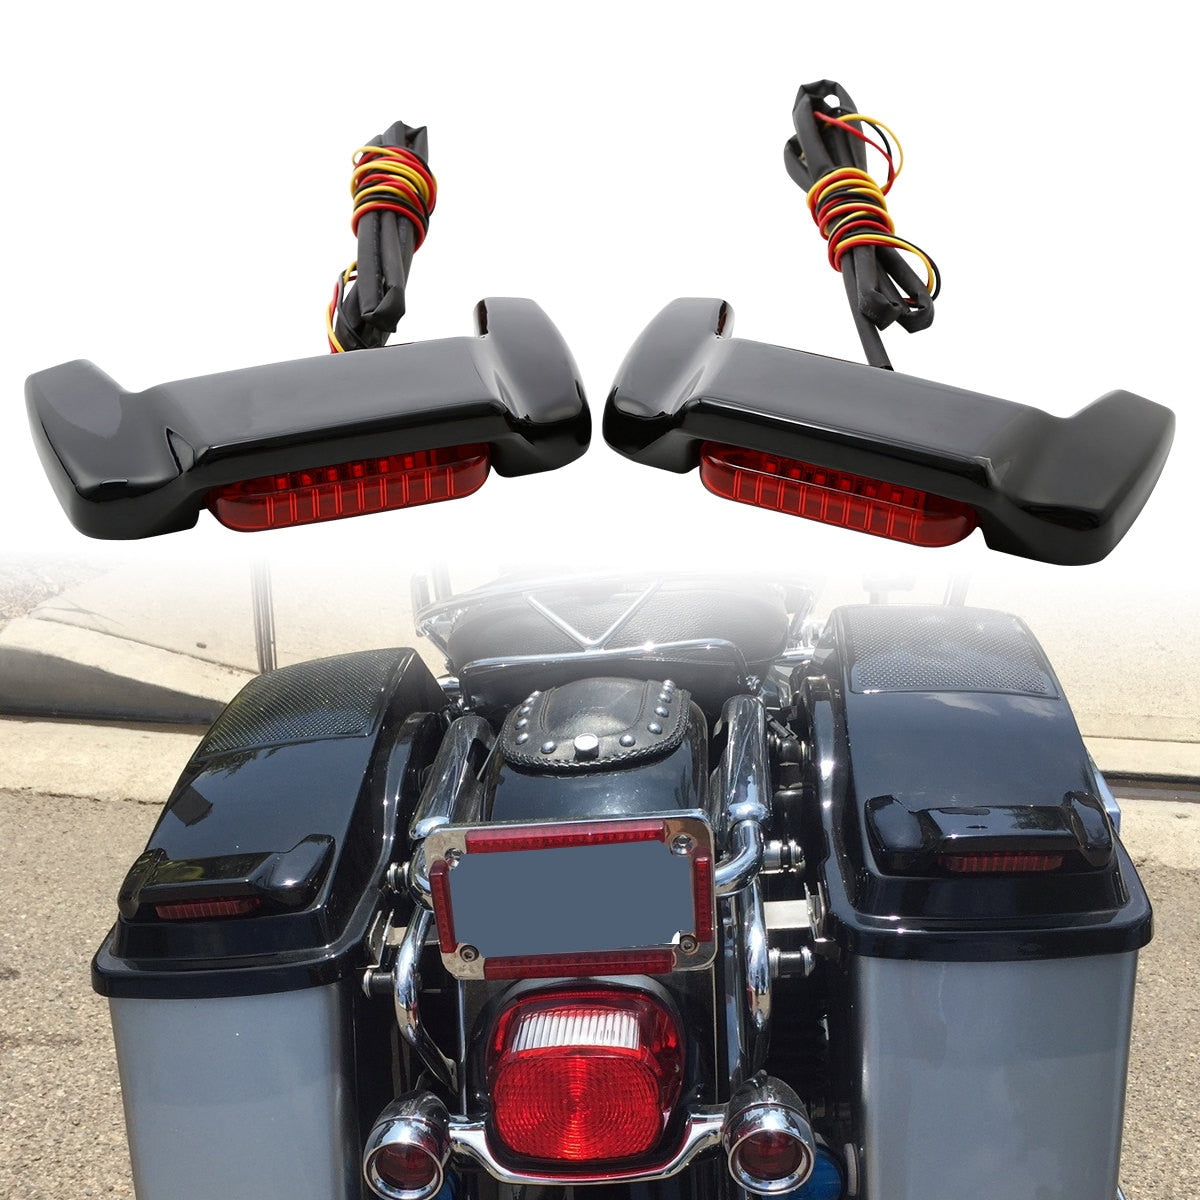 Voodoo Cycle House Custom Hard Saddlebag Lid Spoiler With LED Lights Kit For Harley-Davidson Touring Models Road King Electra Street Glide 2014-UP